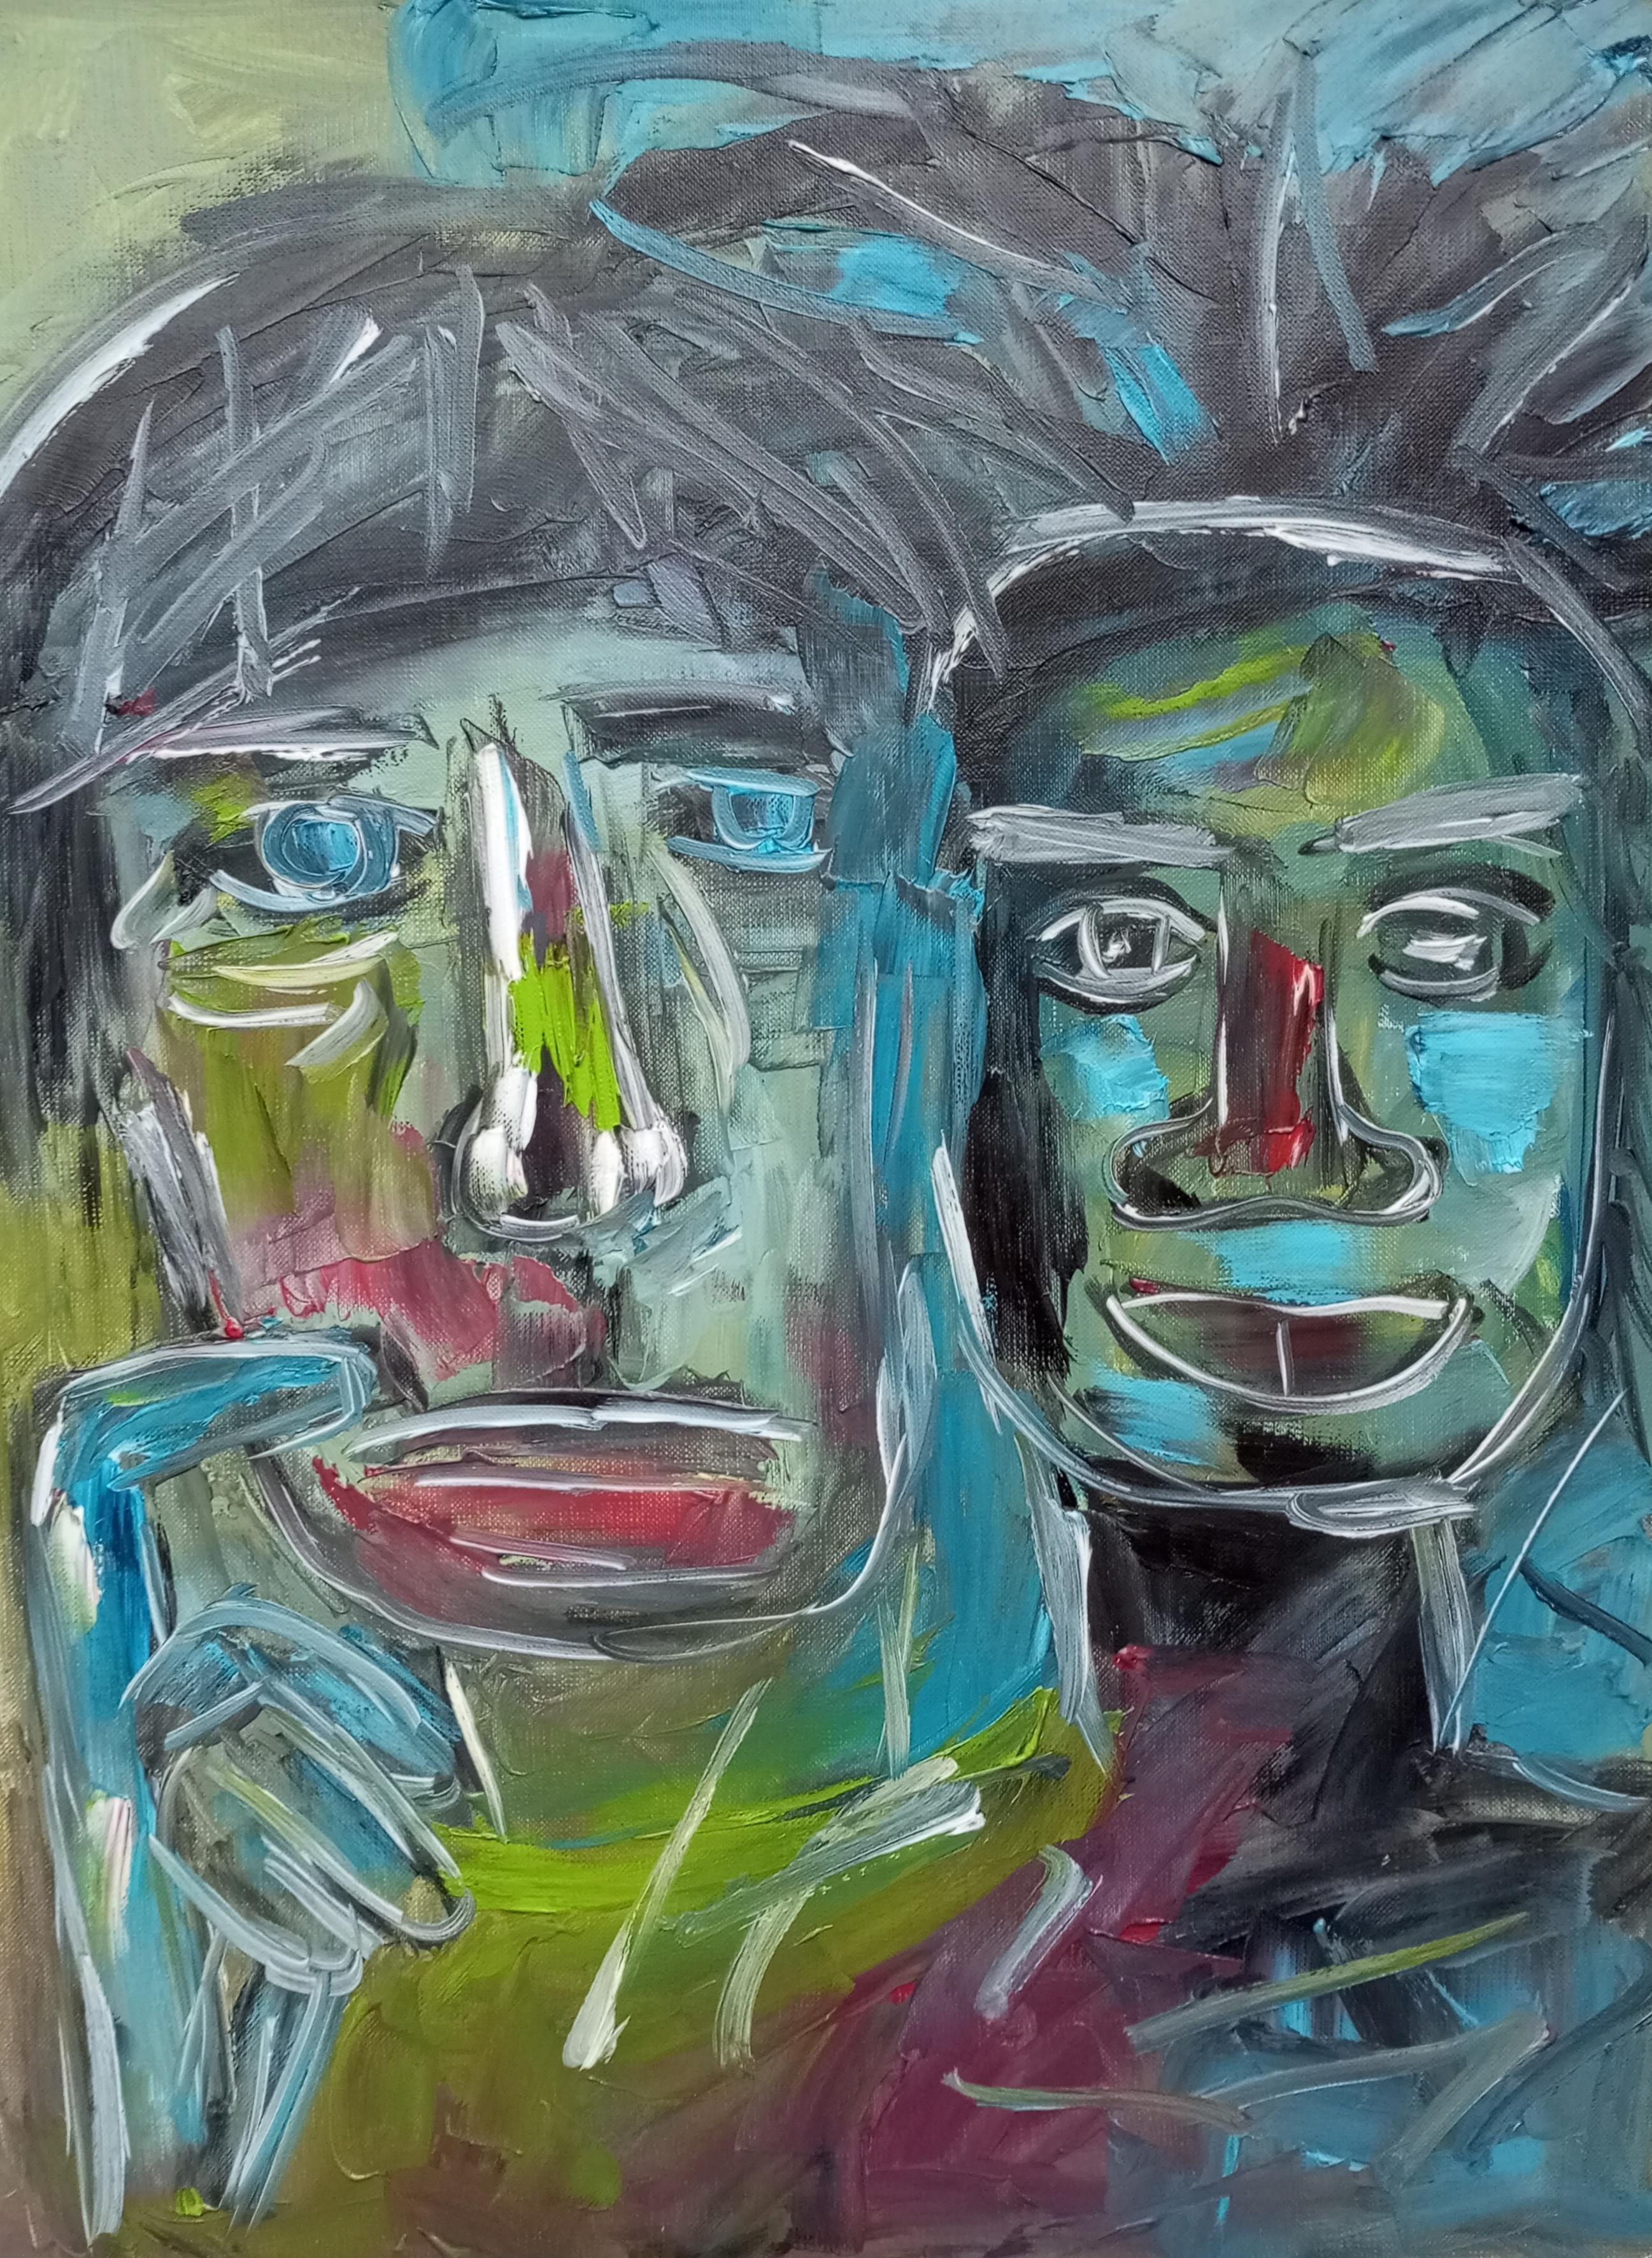  "Friendship Wharol/Basquiat"